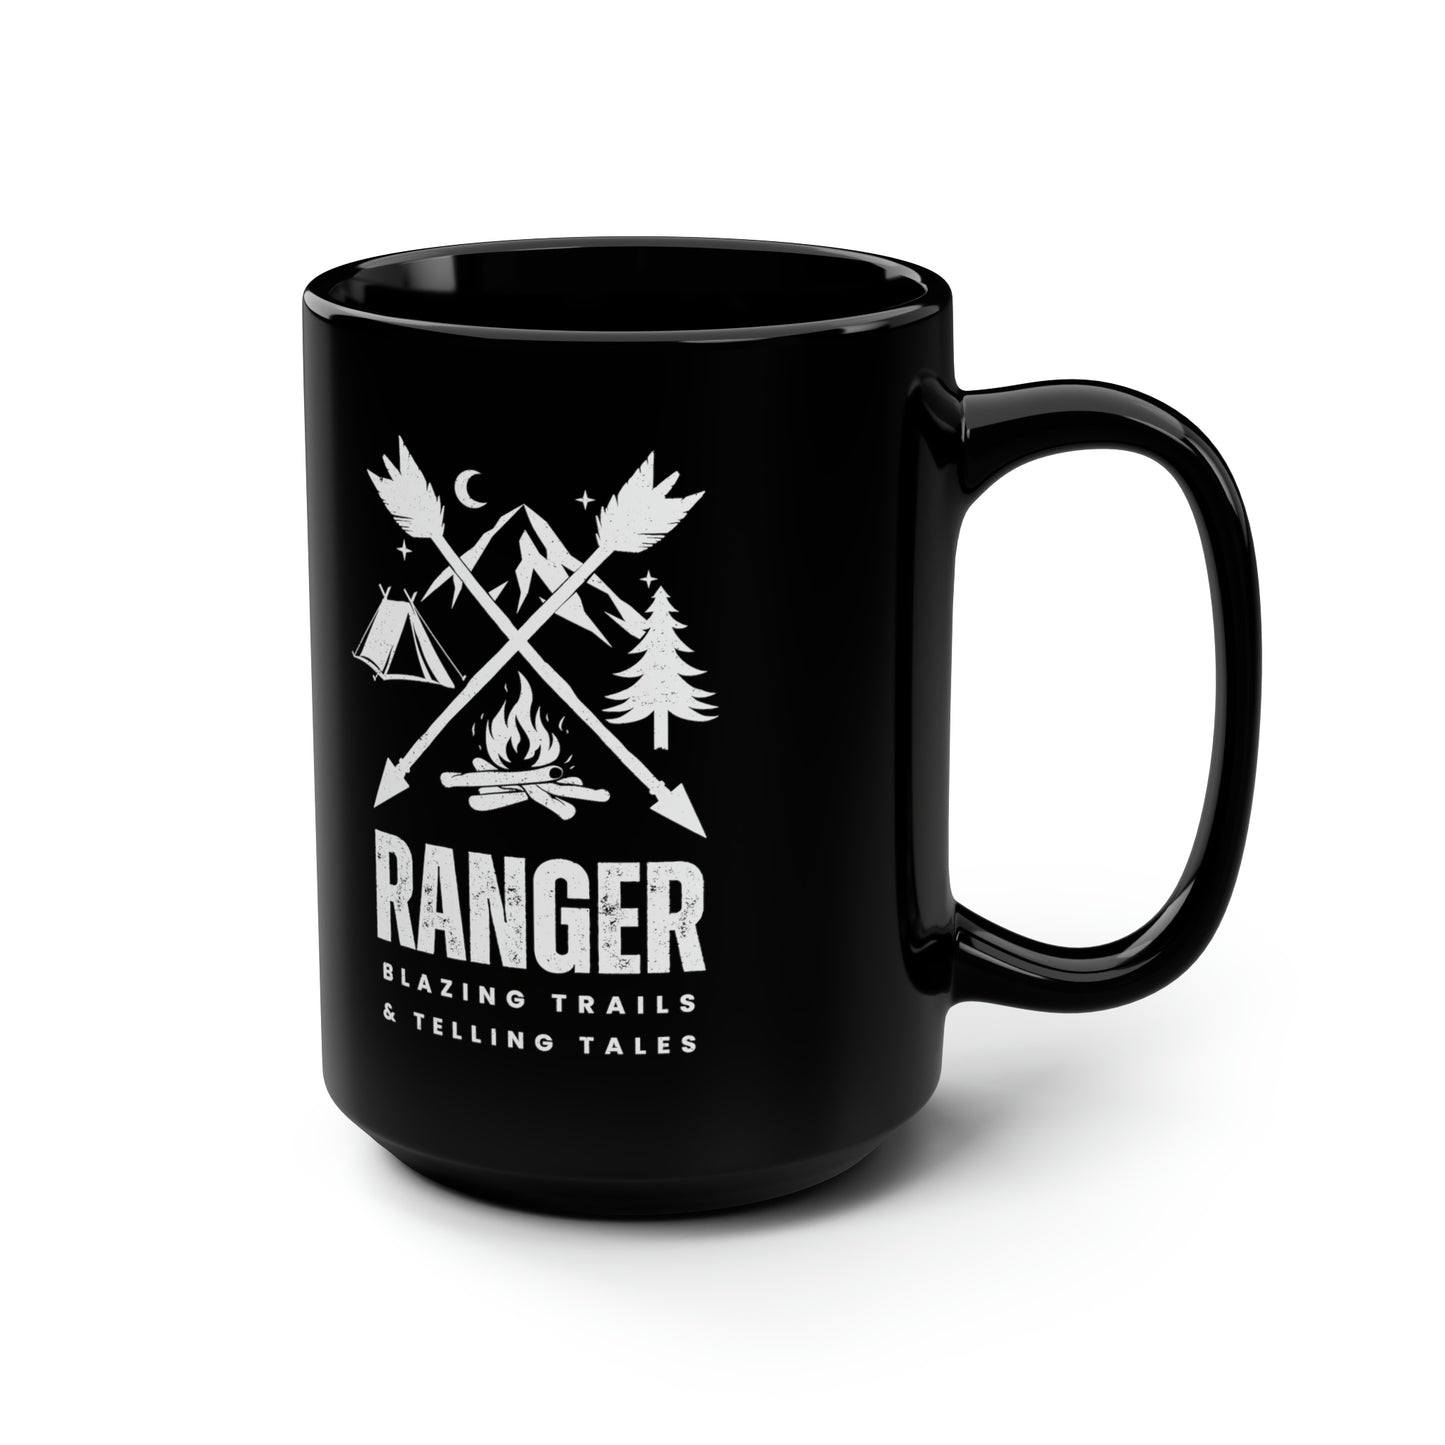 Ranger: Blazing Trails and Telling Tales - Large Black Mug, 15 oz